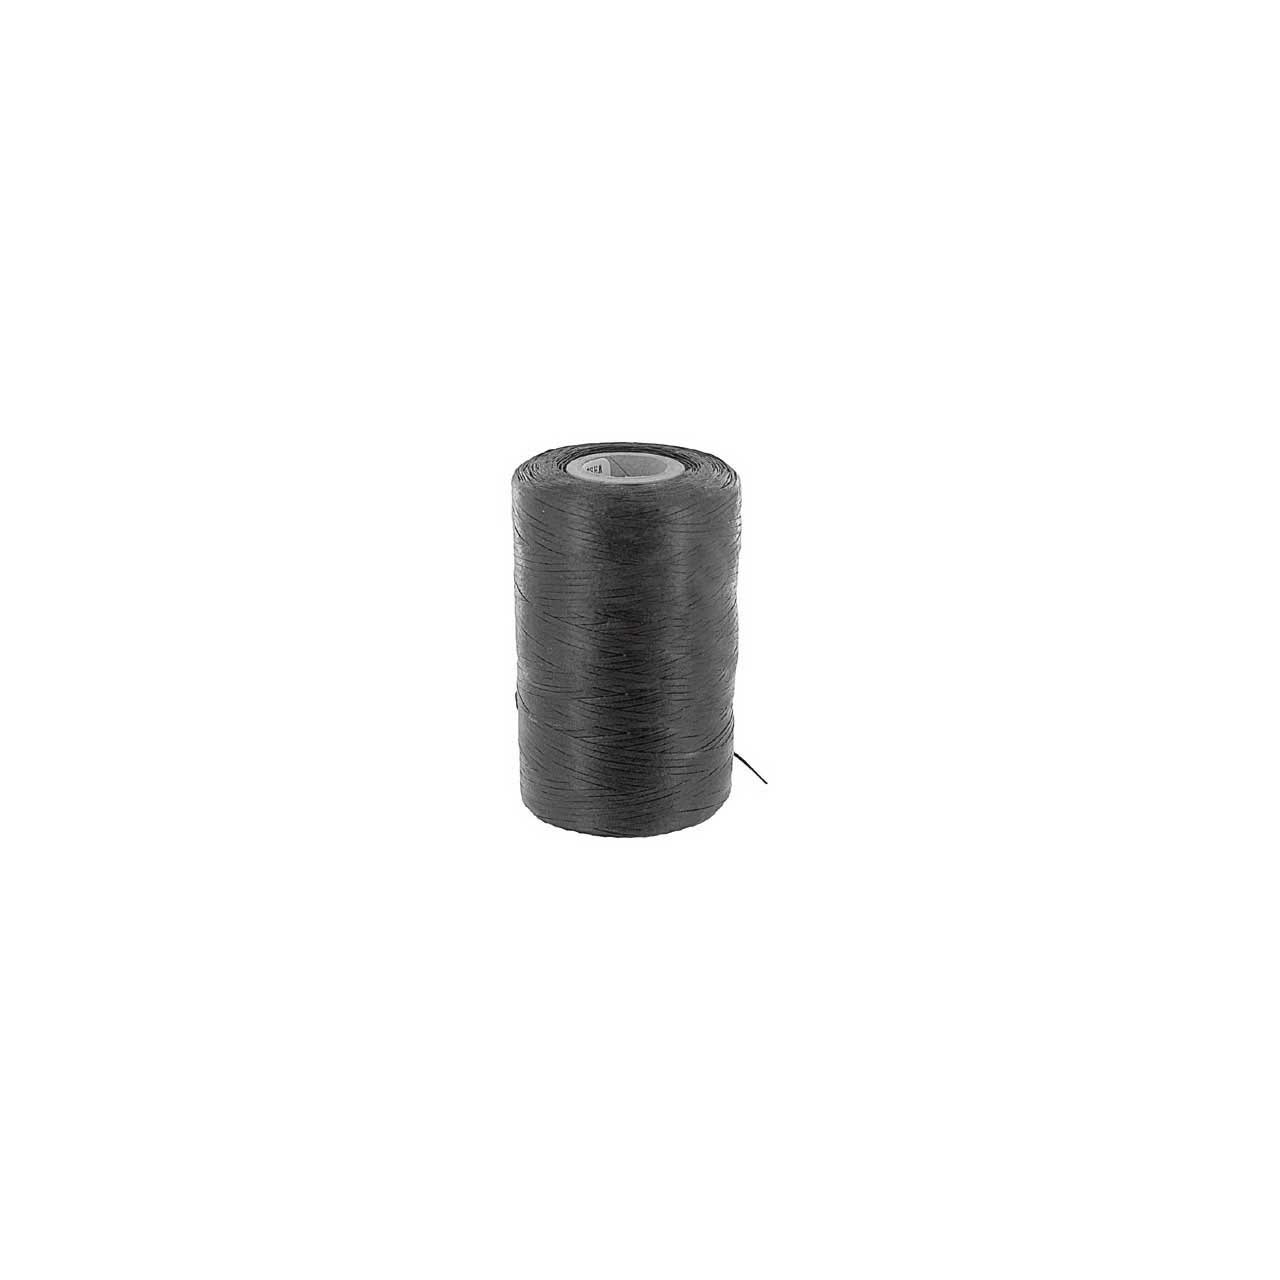 Black Waxed Nylon Cable Lacing Cord 500 Yard Roll